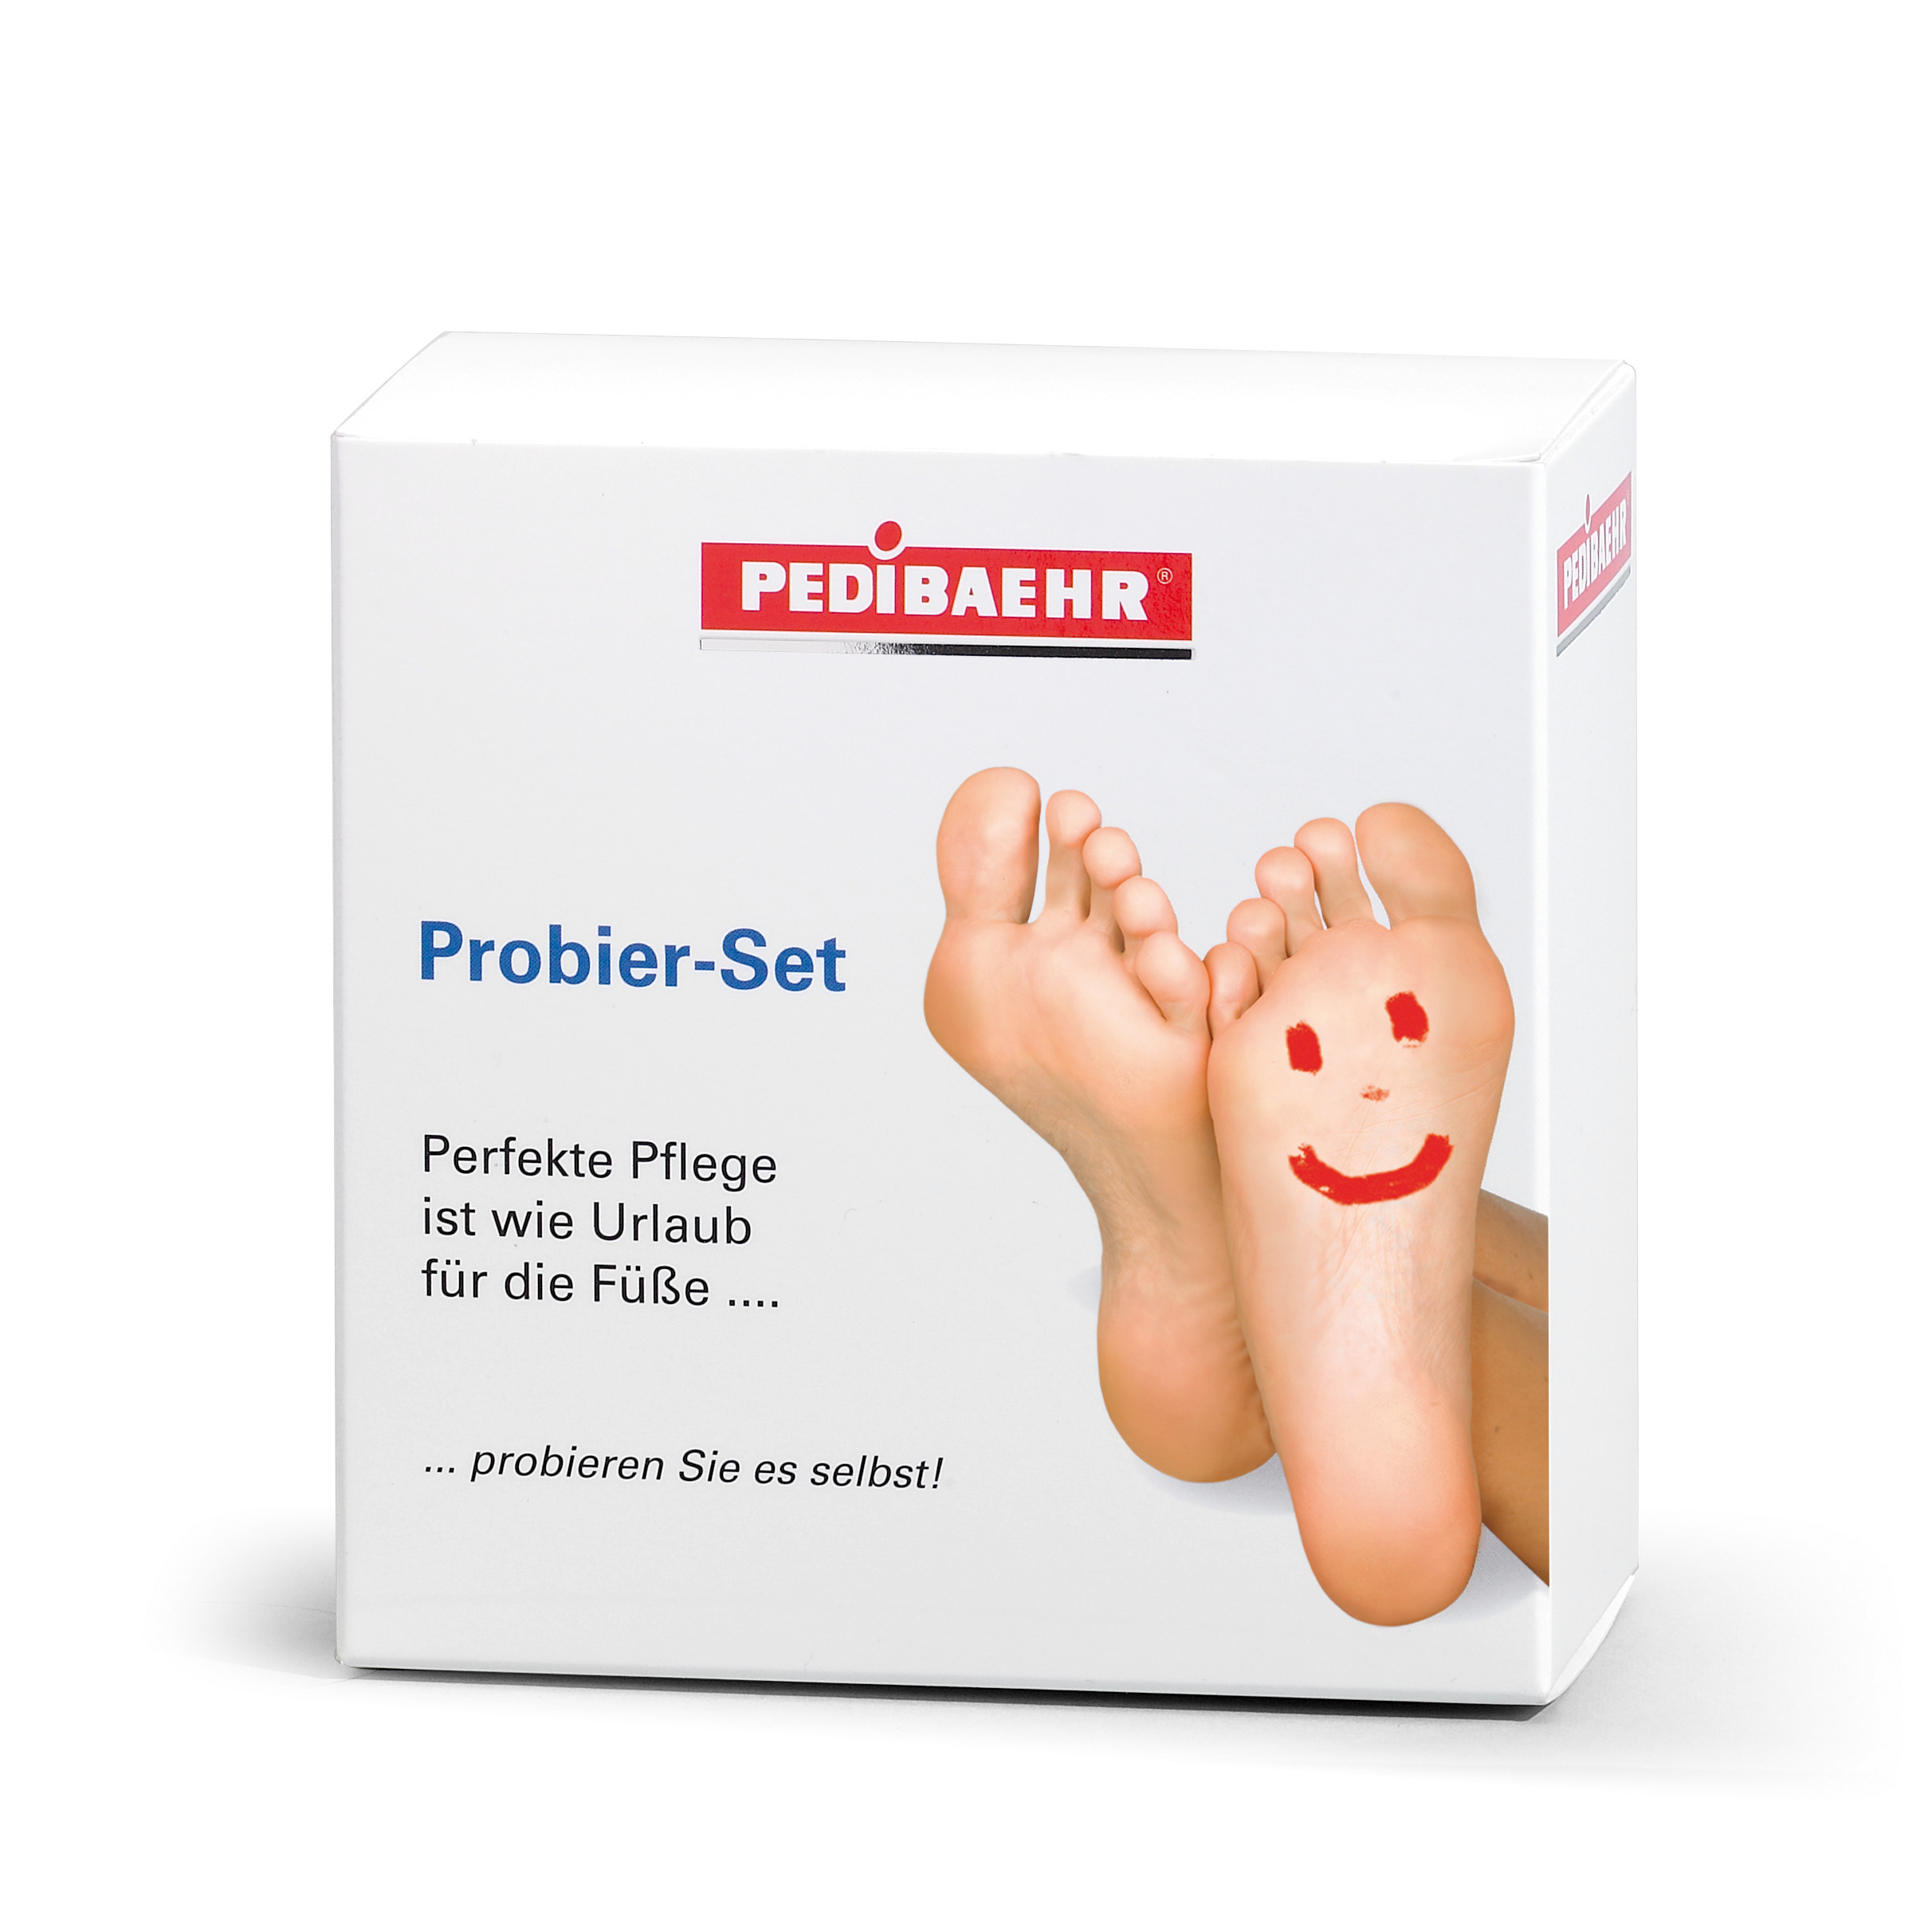 pedibaehr-probier-set_10883